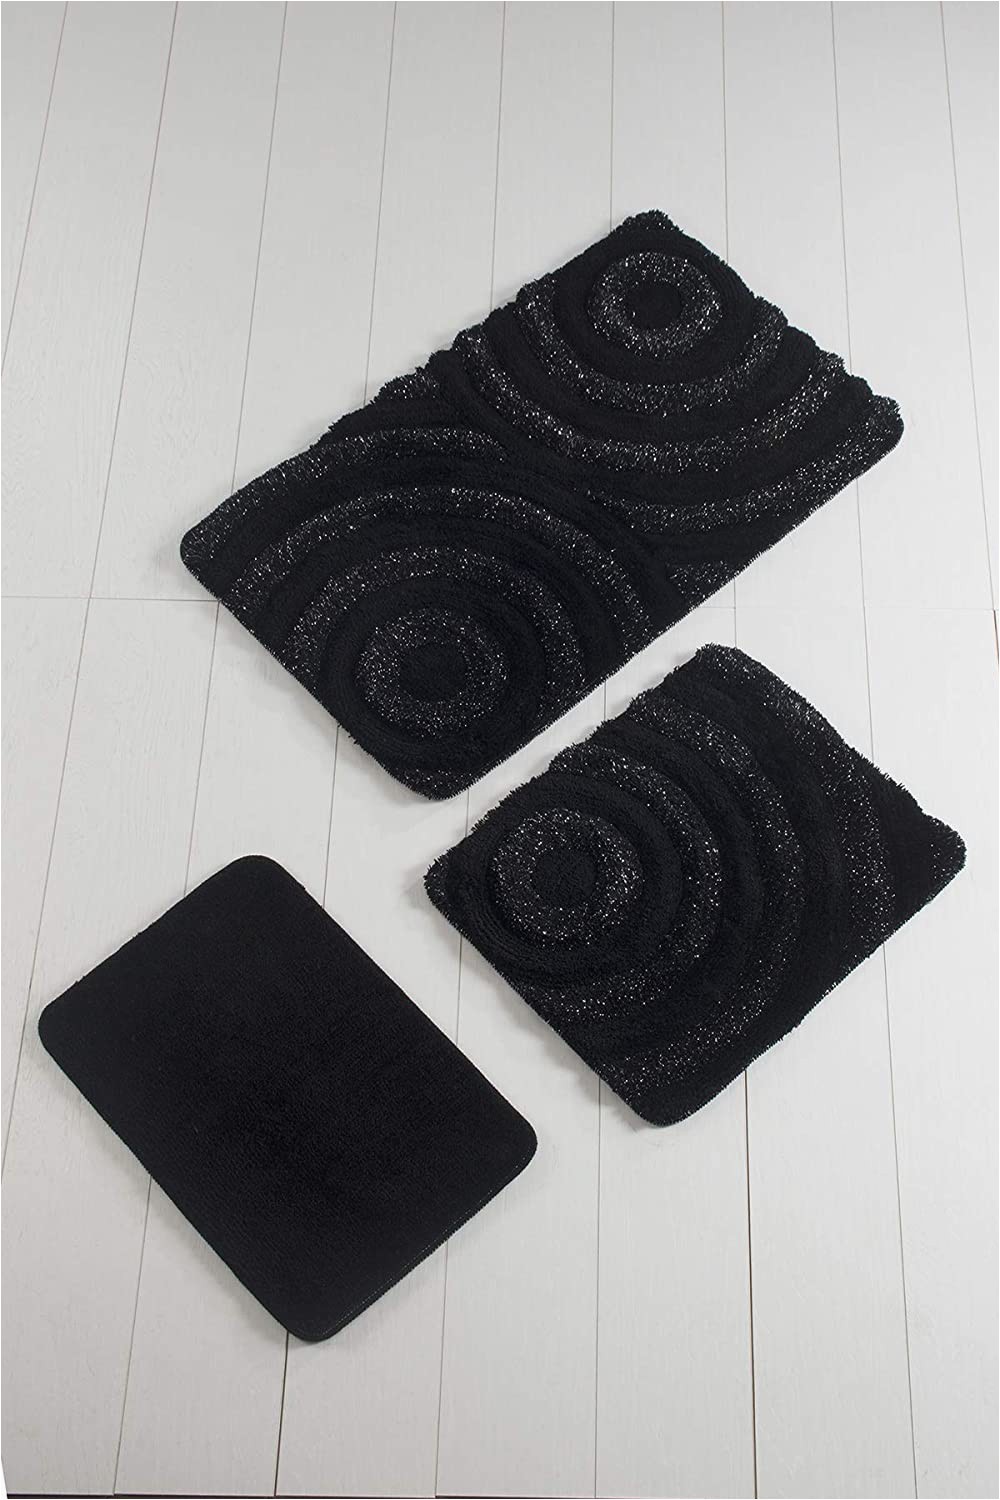 Black and Beige Bathroom Rugs Amazon Wave Black Bathroom Rugs Set 3 Pieces 24 X 40